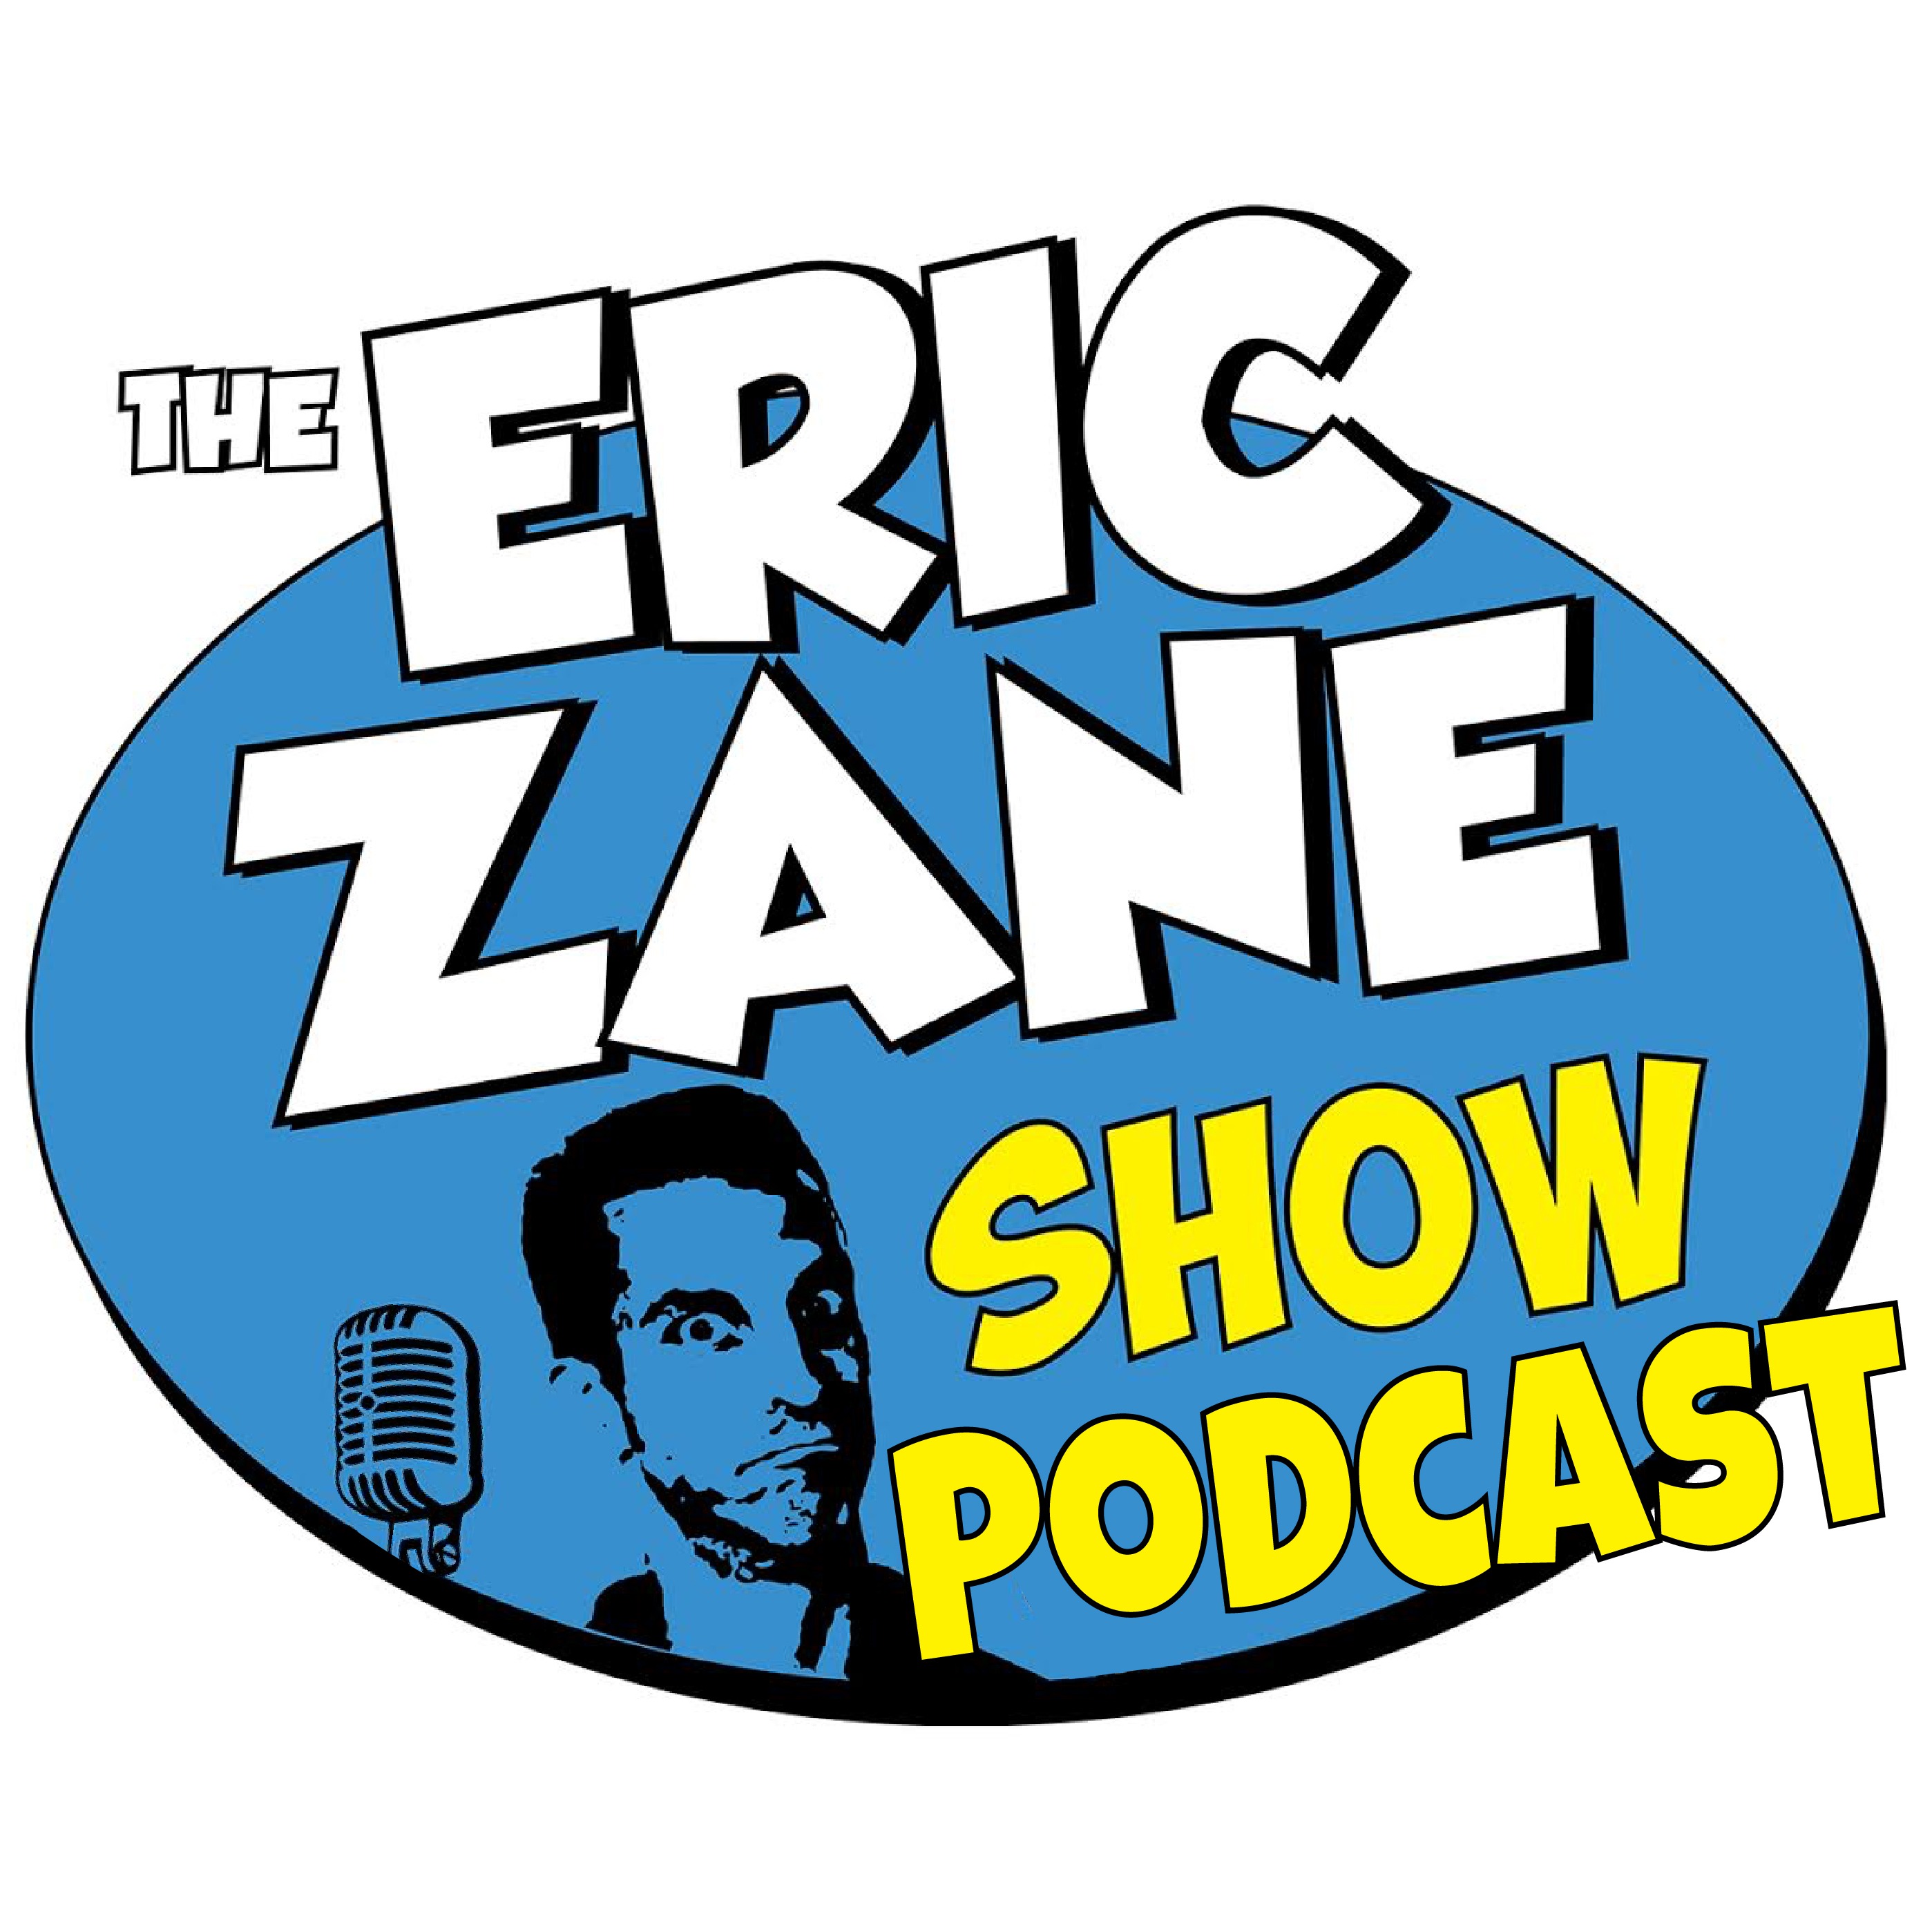 Eric Zane Show Podcast 1000 - Refs ruin Super Bowl